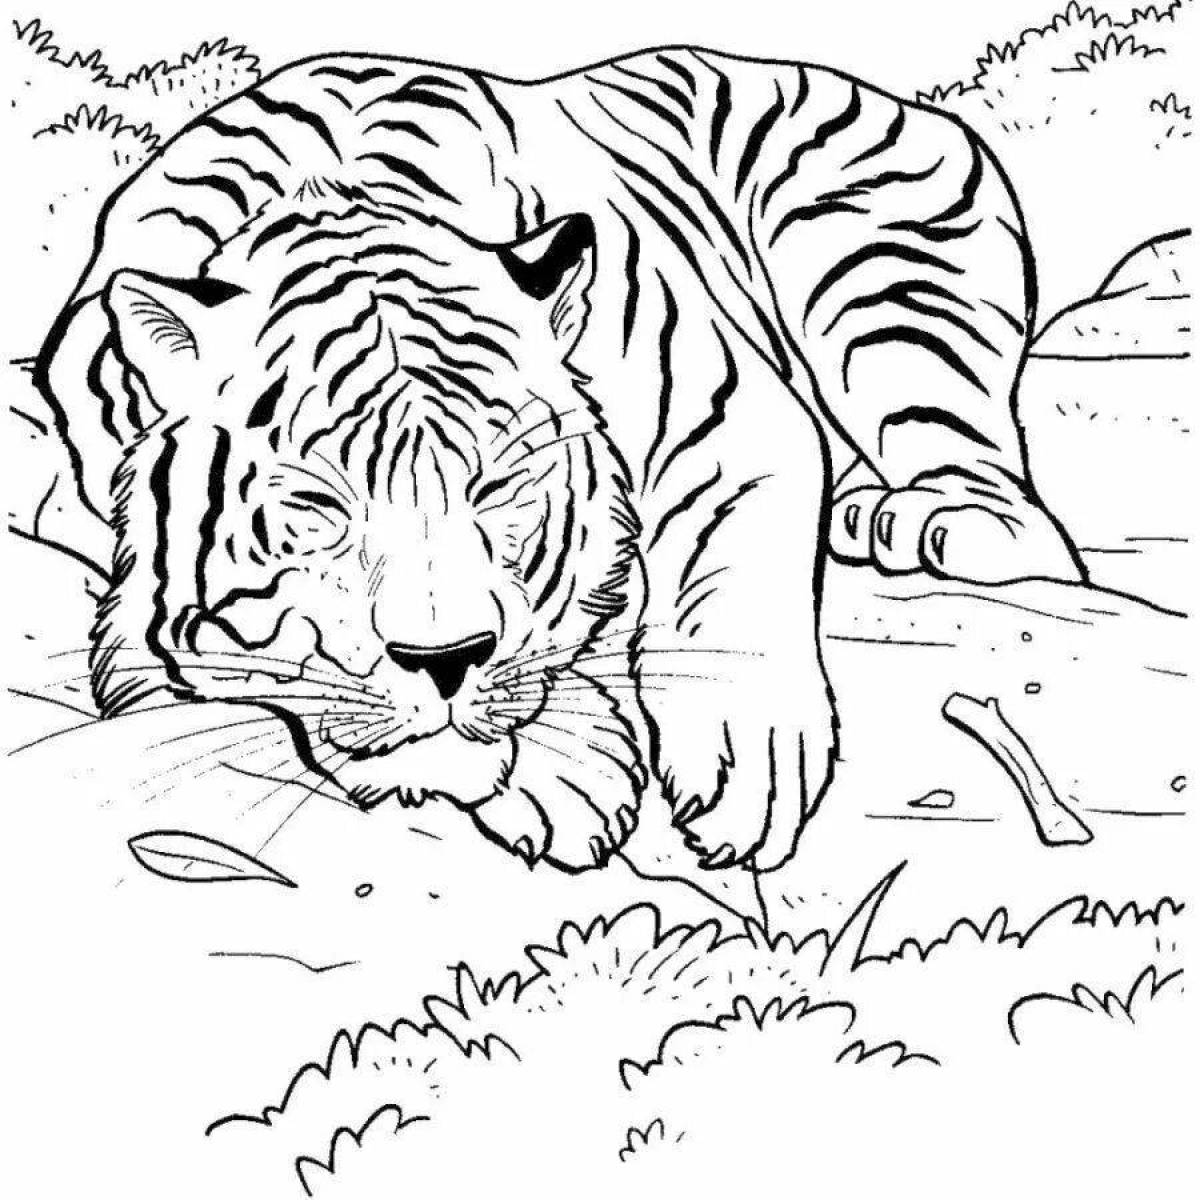 Coloring book captivating Amur tiger